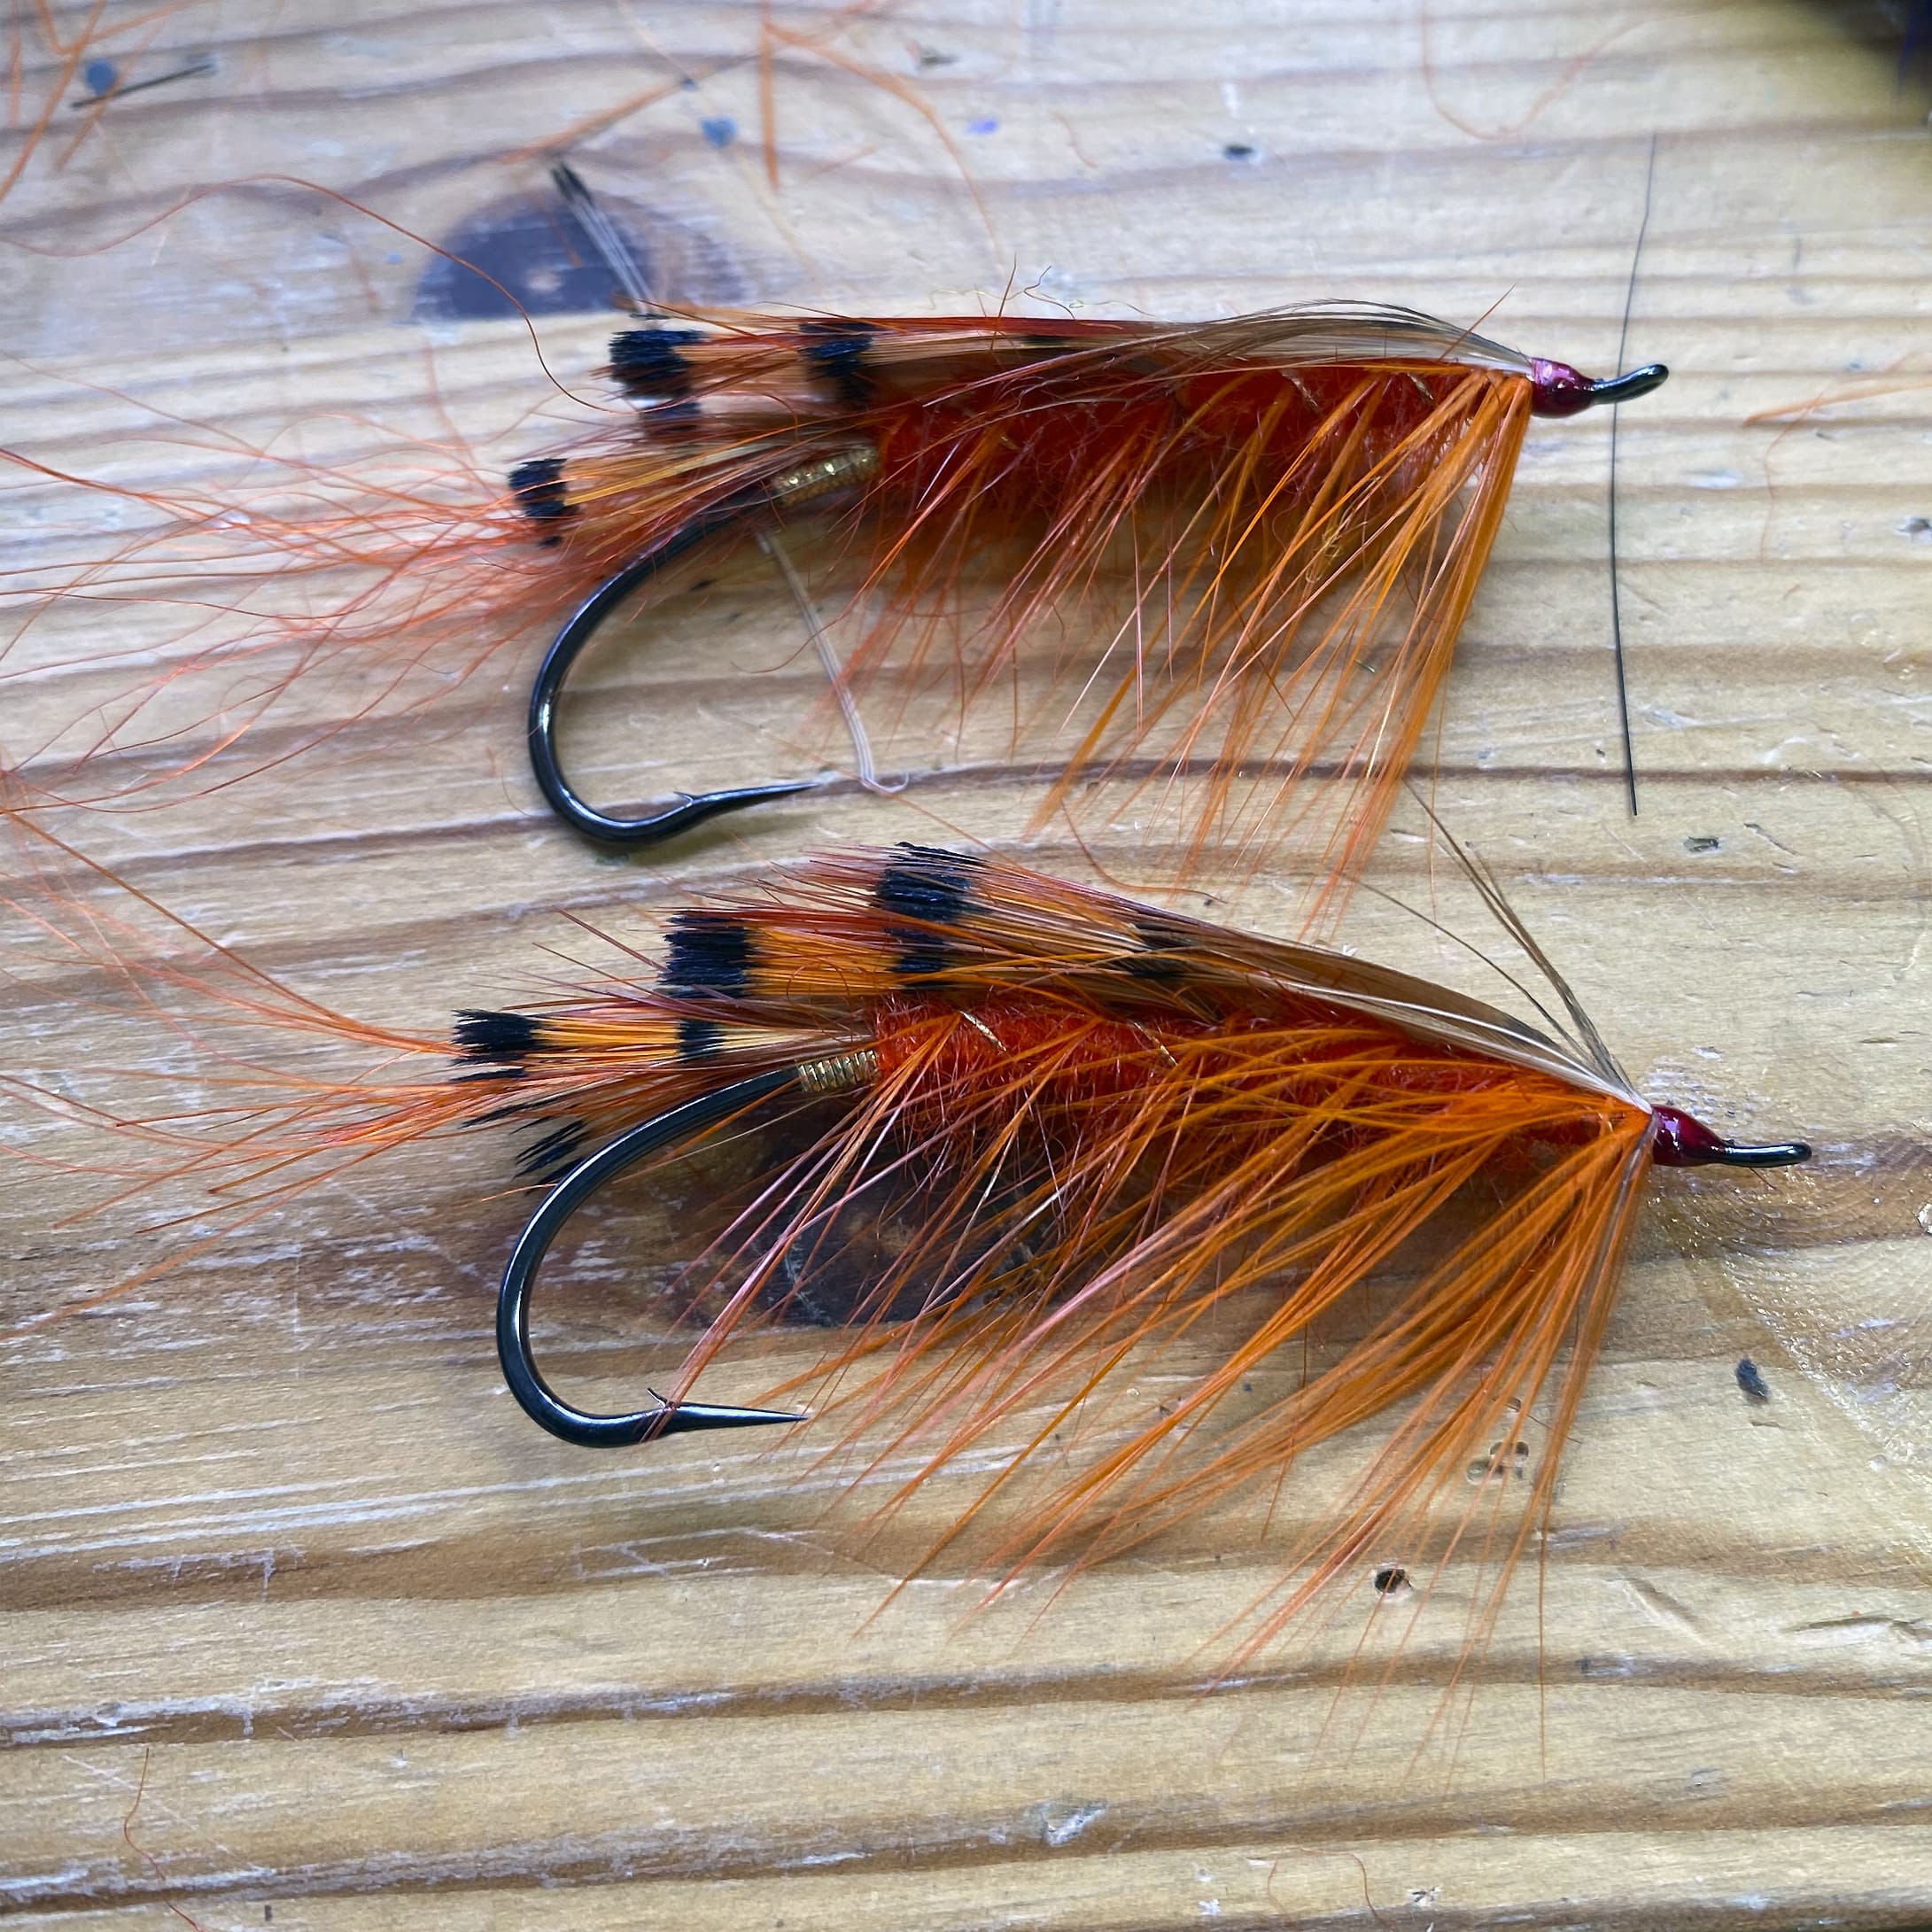 Steelhead Fly Fishing: Combs, Trey, Smith, Loren: 9781558211193:  : Books